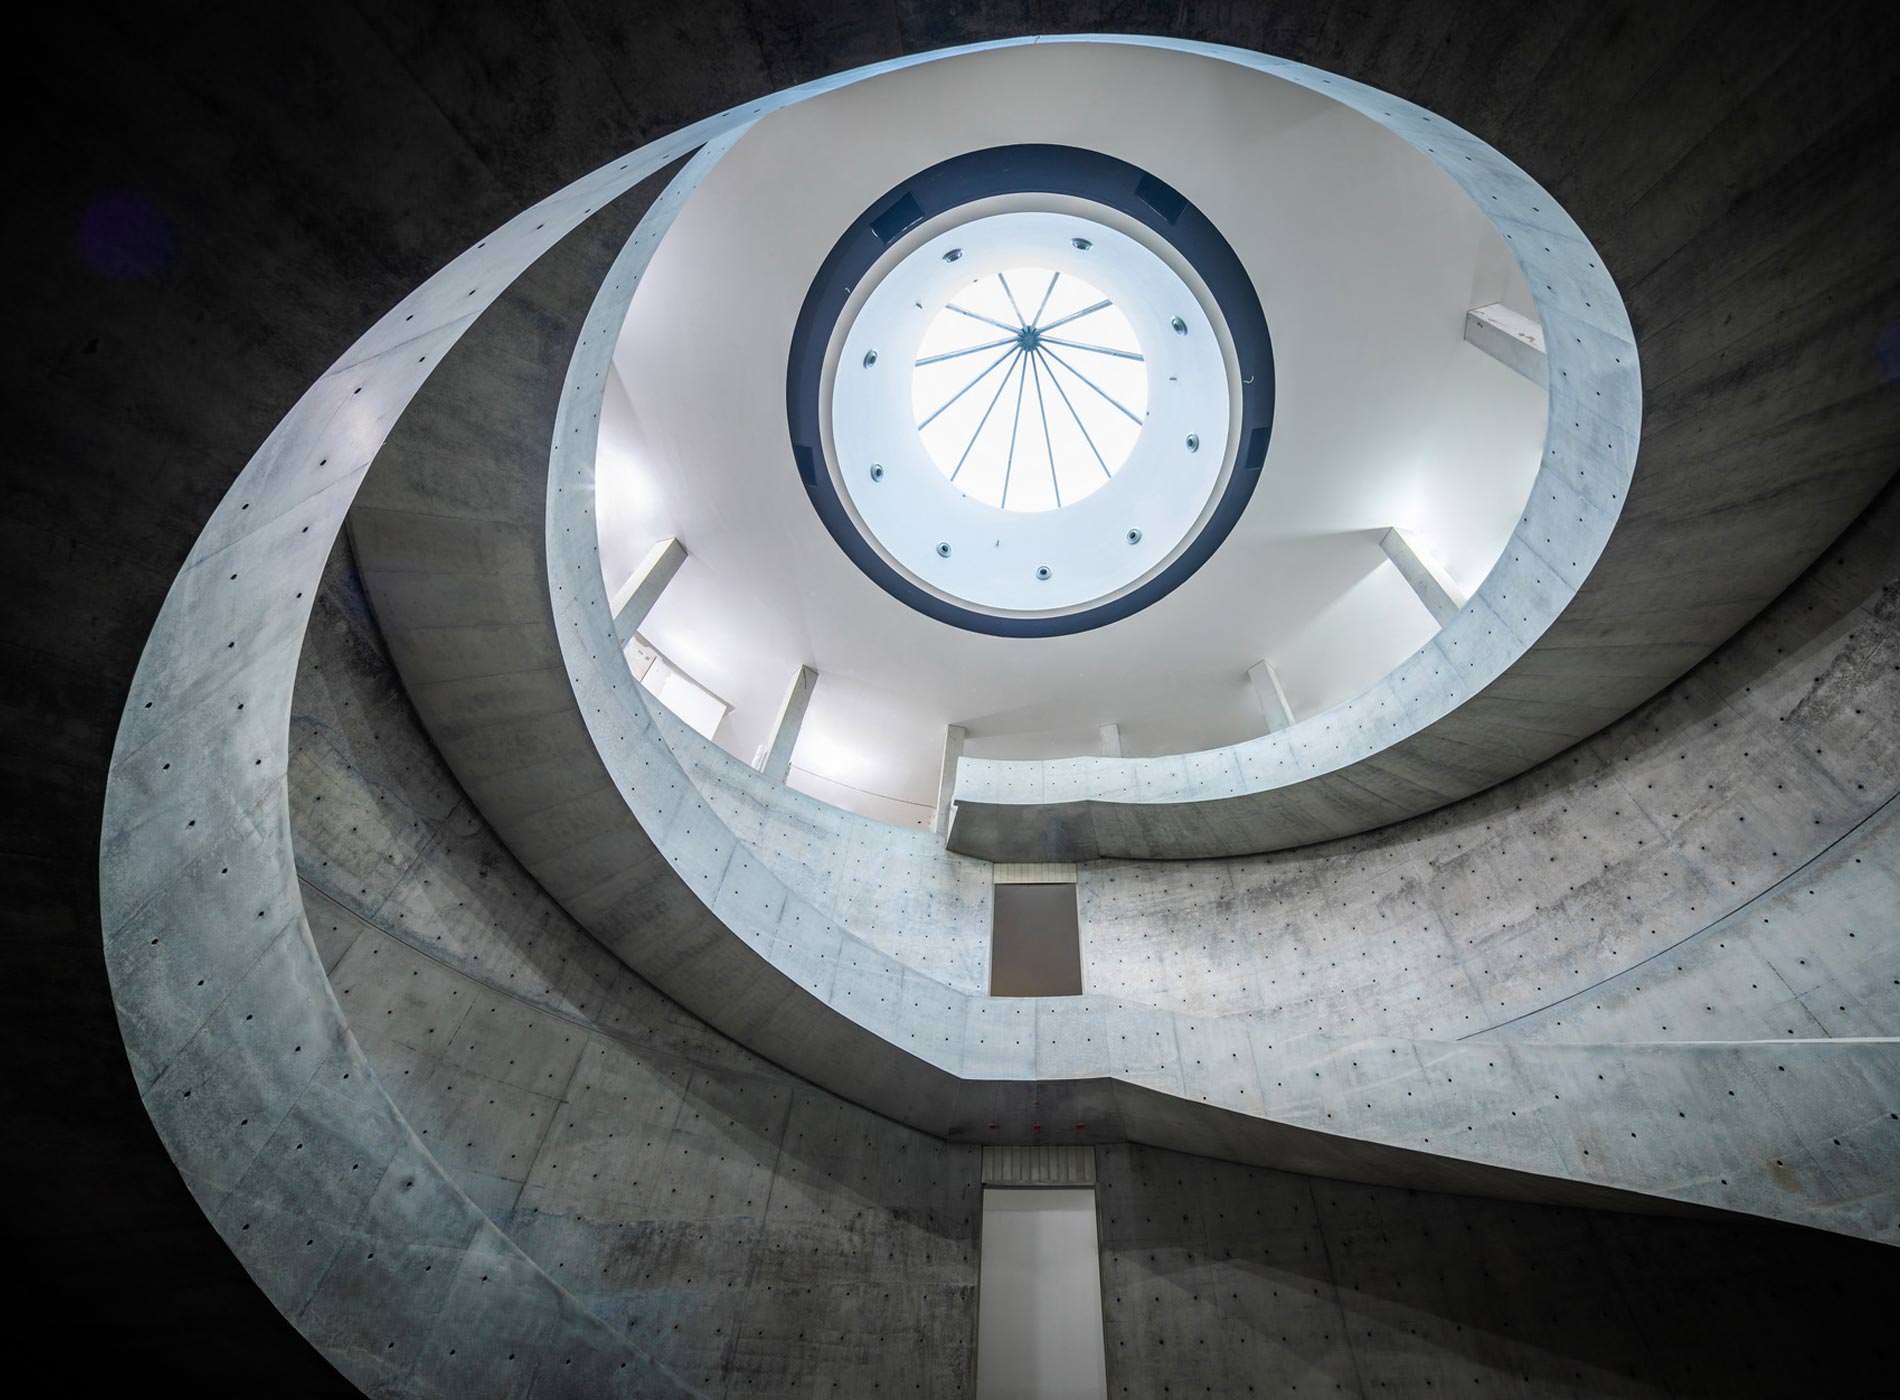 He Art Museum (HEM) Shunde, Province du Guangdong, Chine — Tadao Ando Architect & Associates